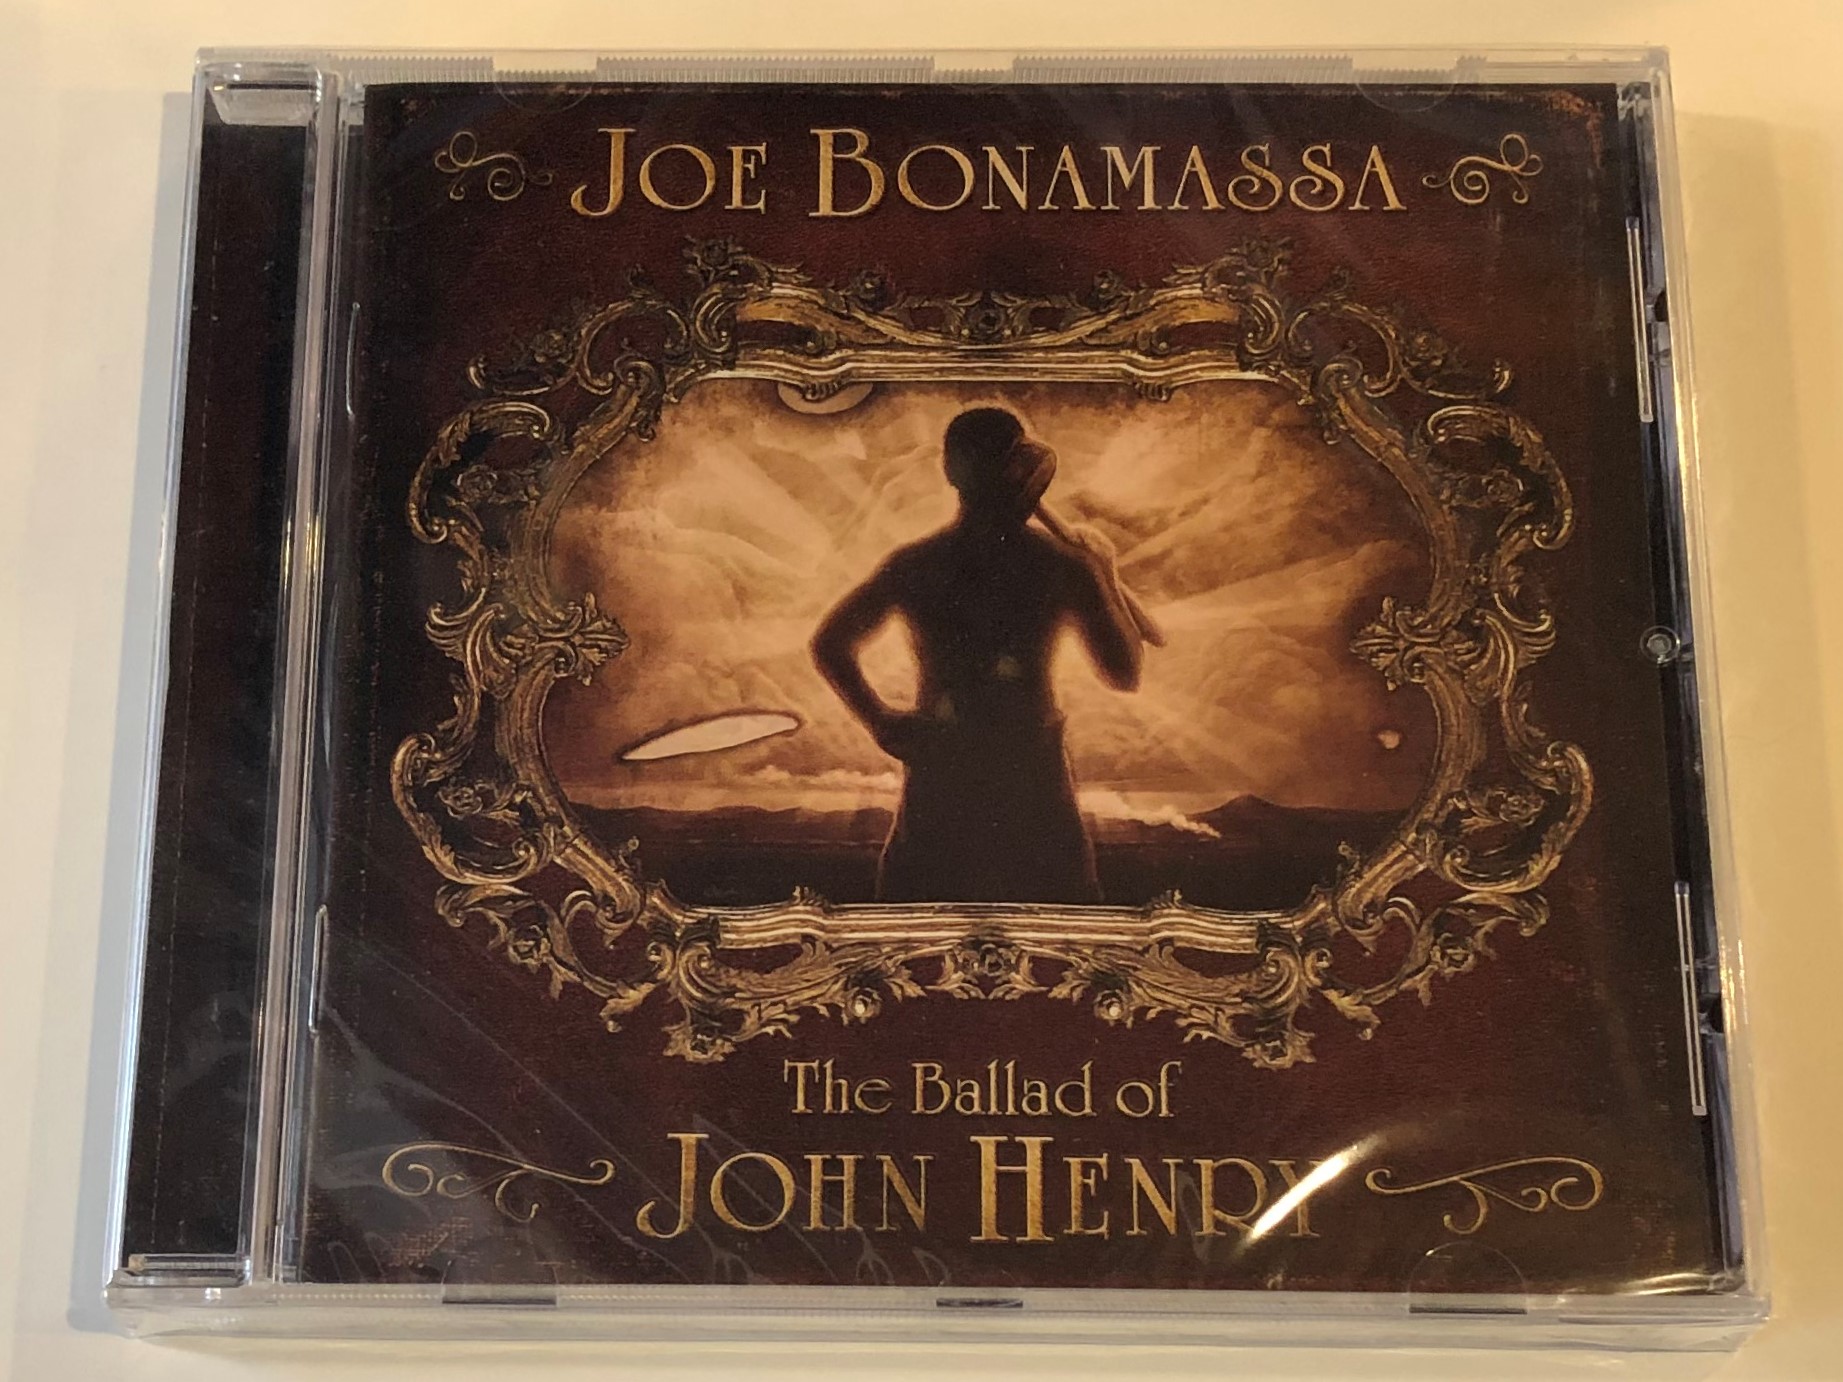 joe-bonamassa-the-ballad-of-john-henry-j-r-adventures-audio-cd-2009-prd-7269-2-1-.jpg